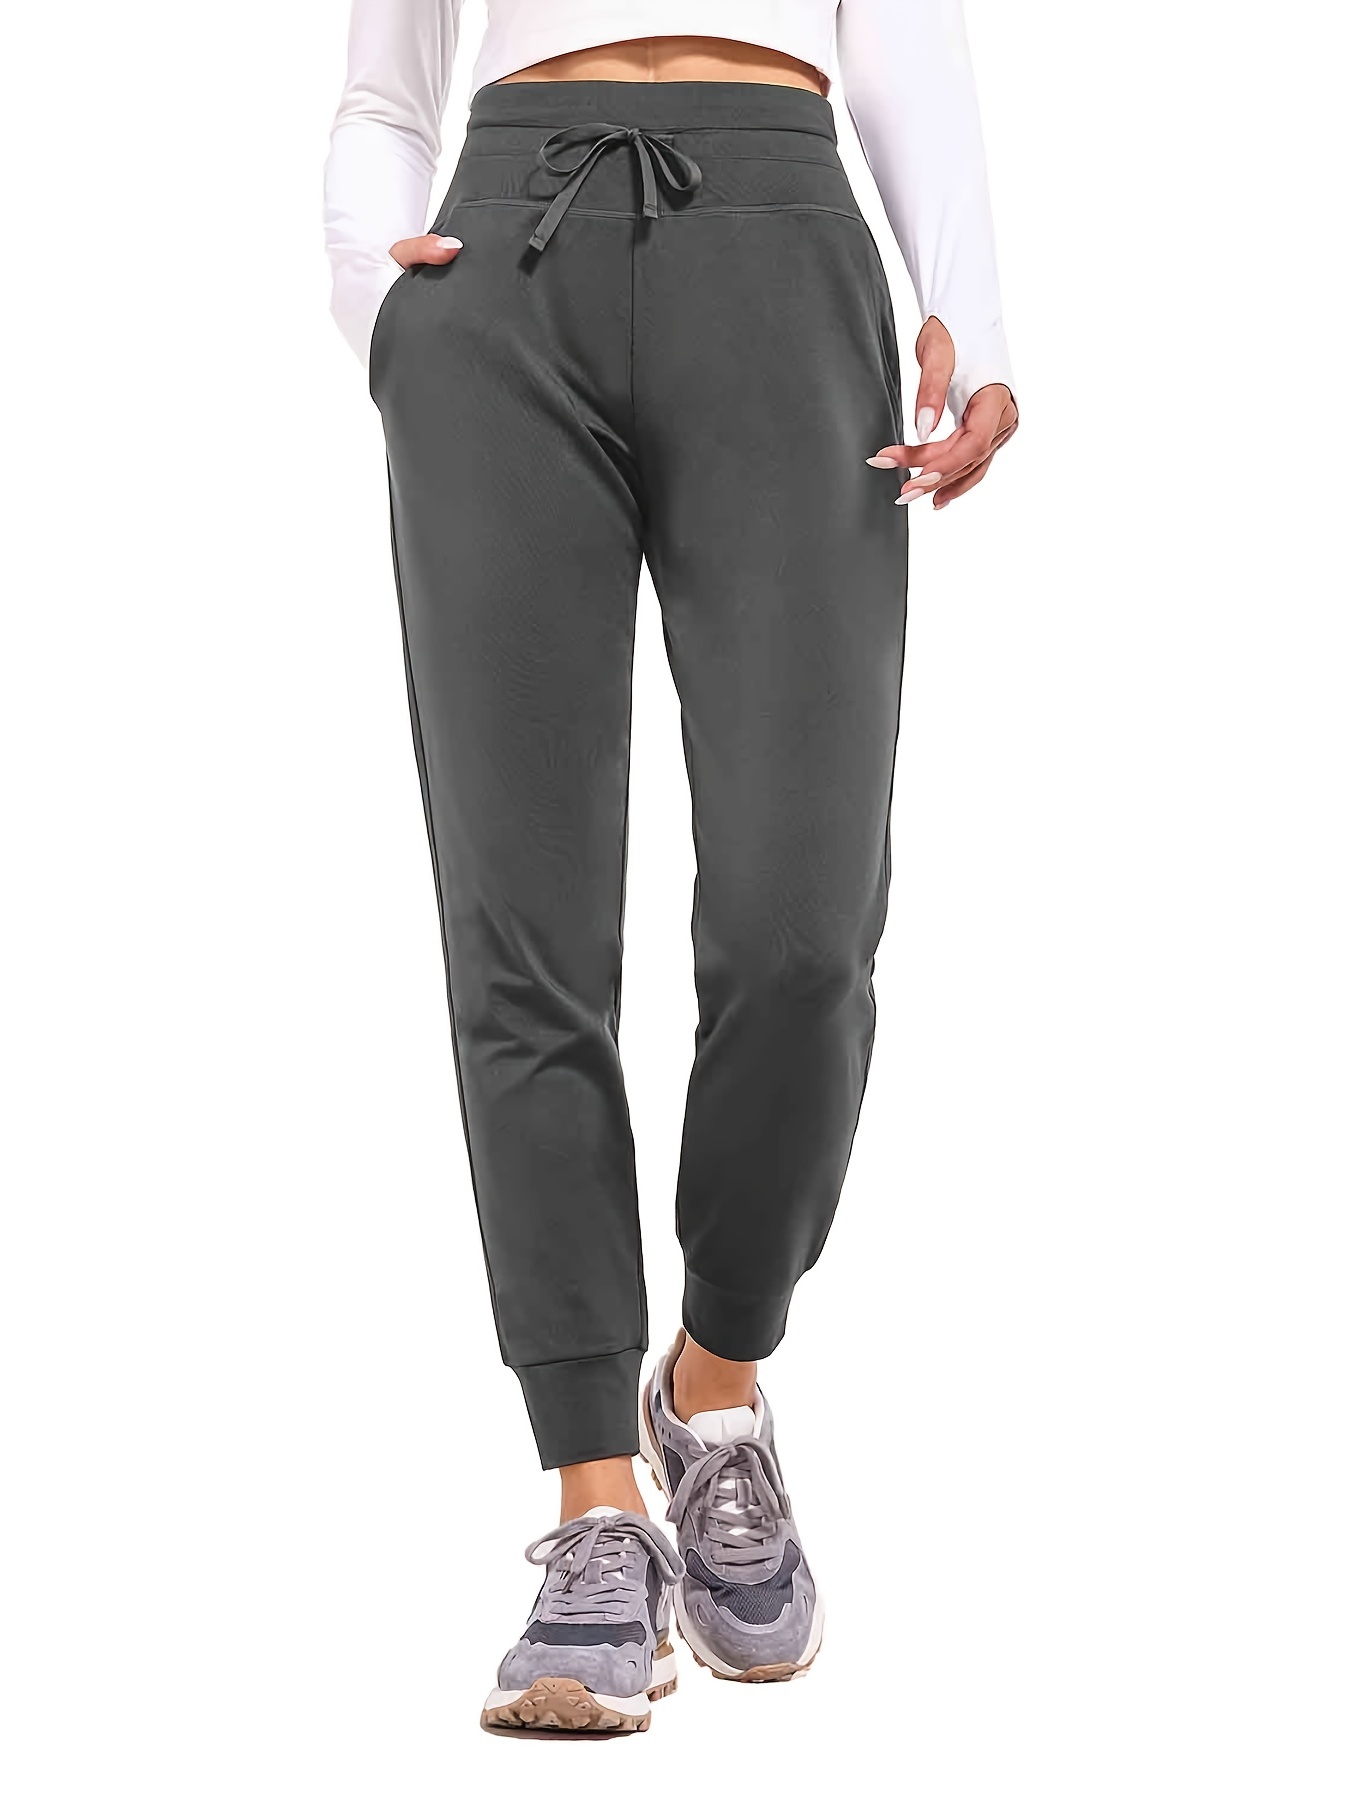 Should You Buy? BALEAF Women's Jogger Hiking Pants 